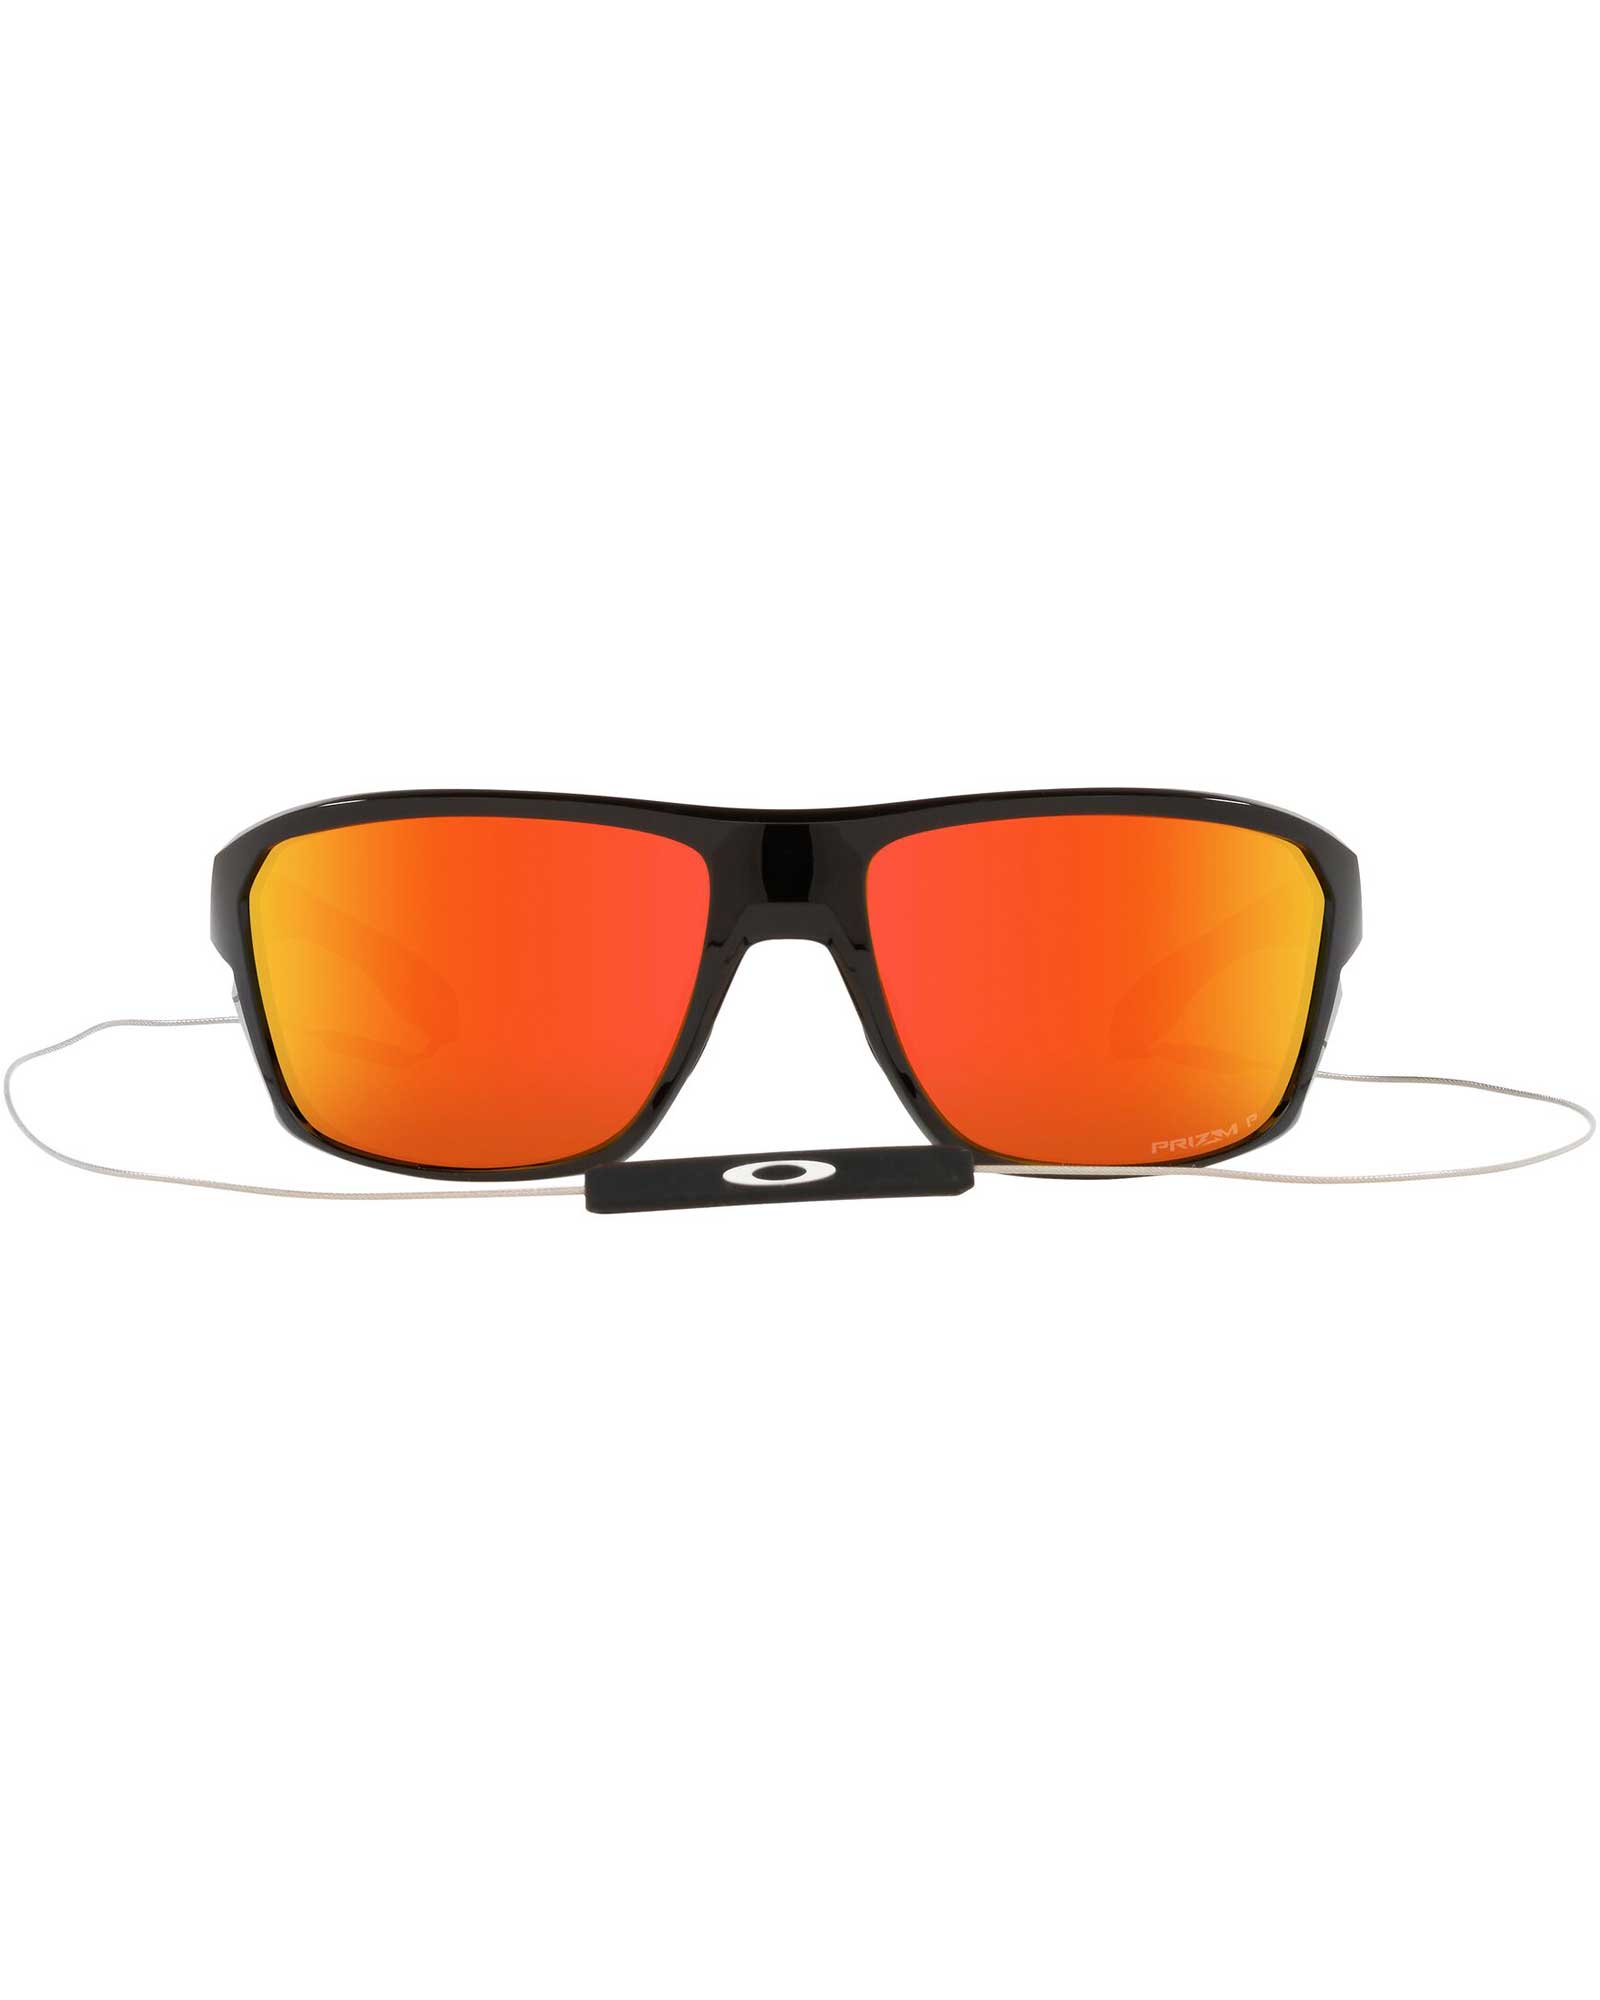 Oakley Split Shot Polished Black / Prizm Ruby Polarized Sunglasses